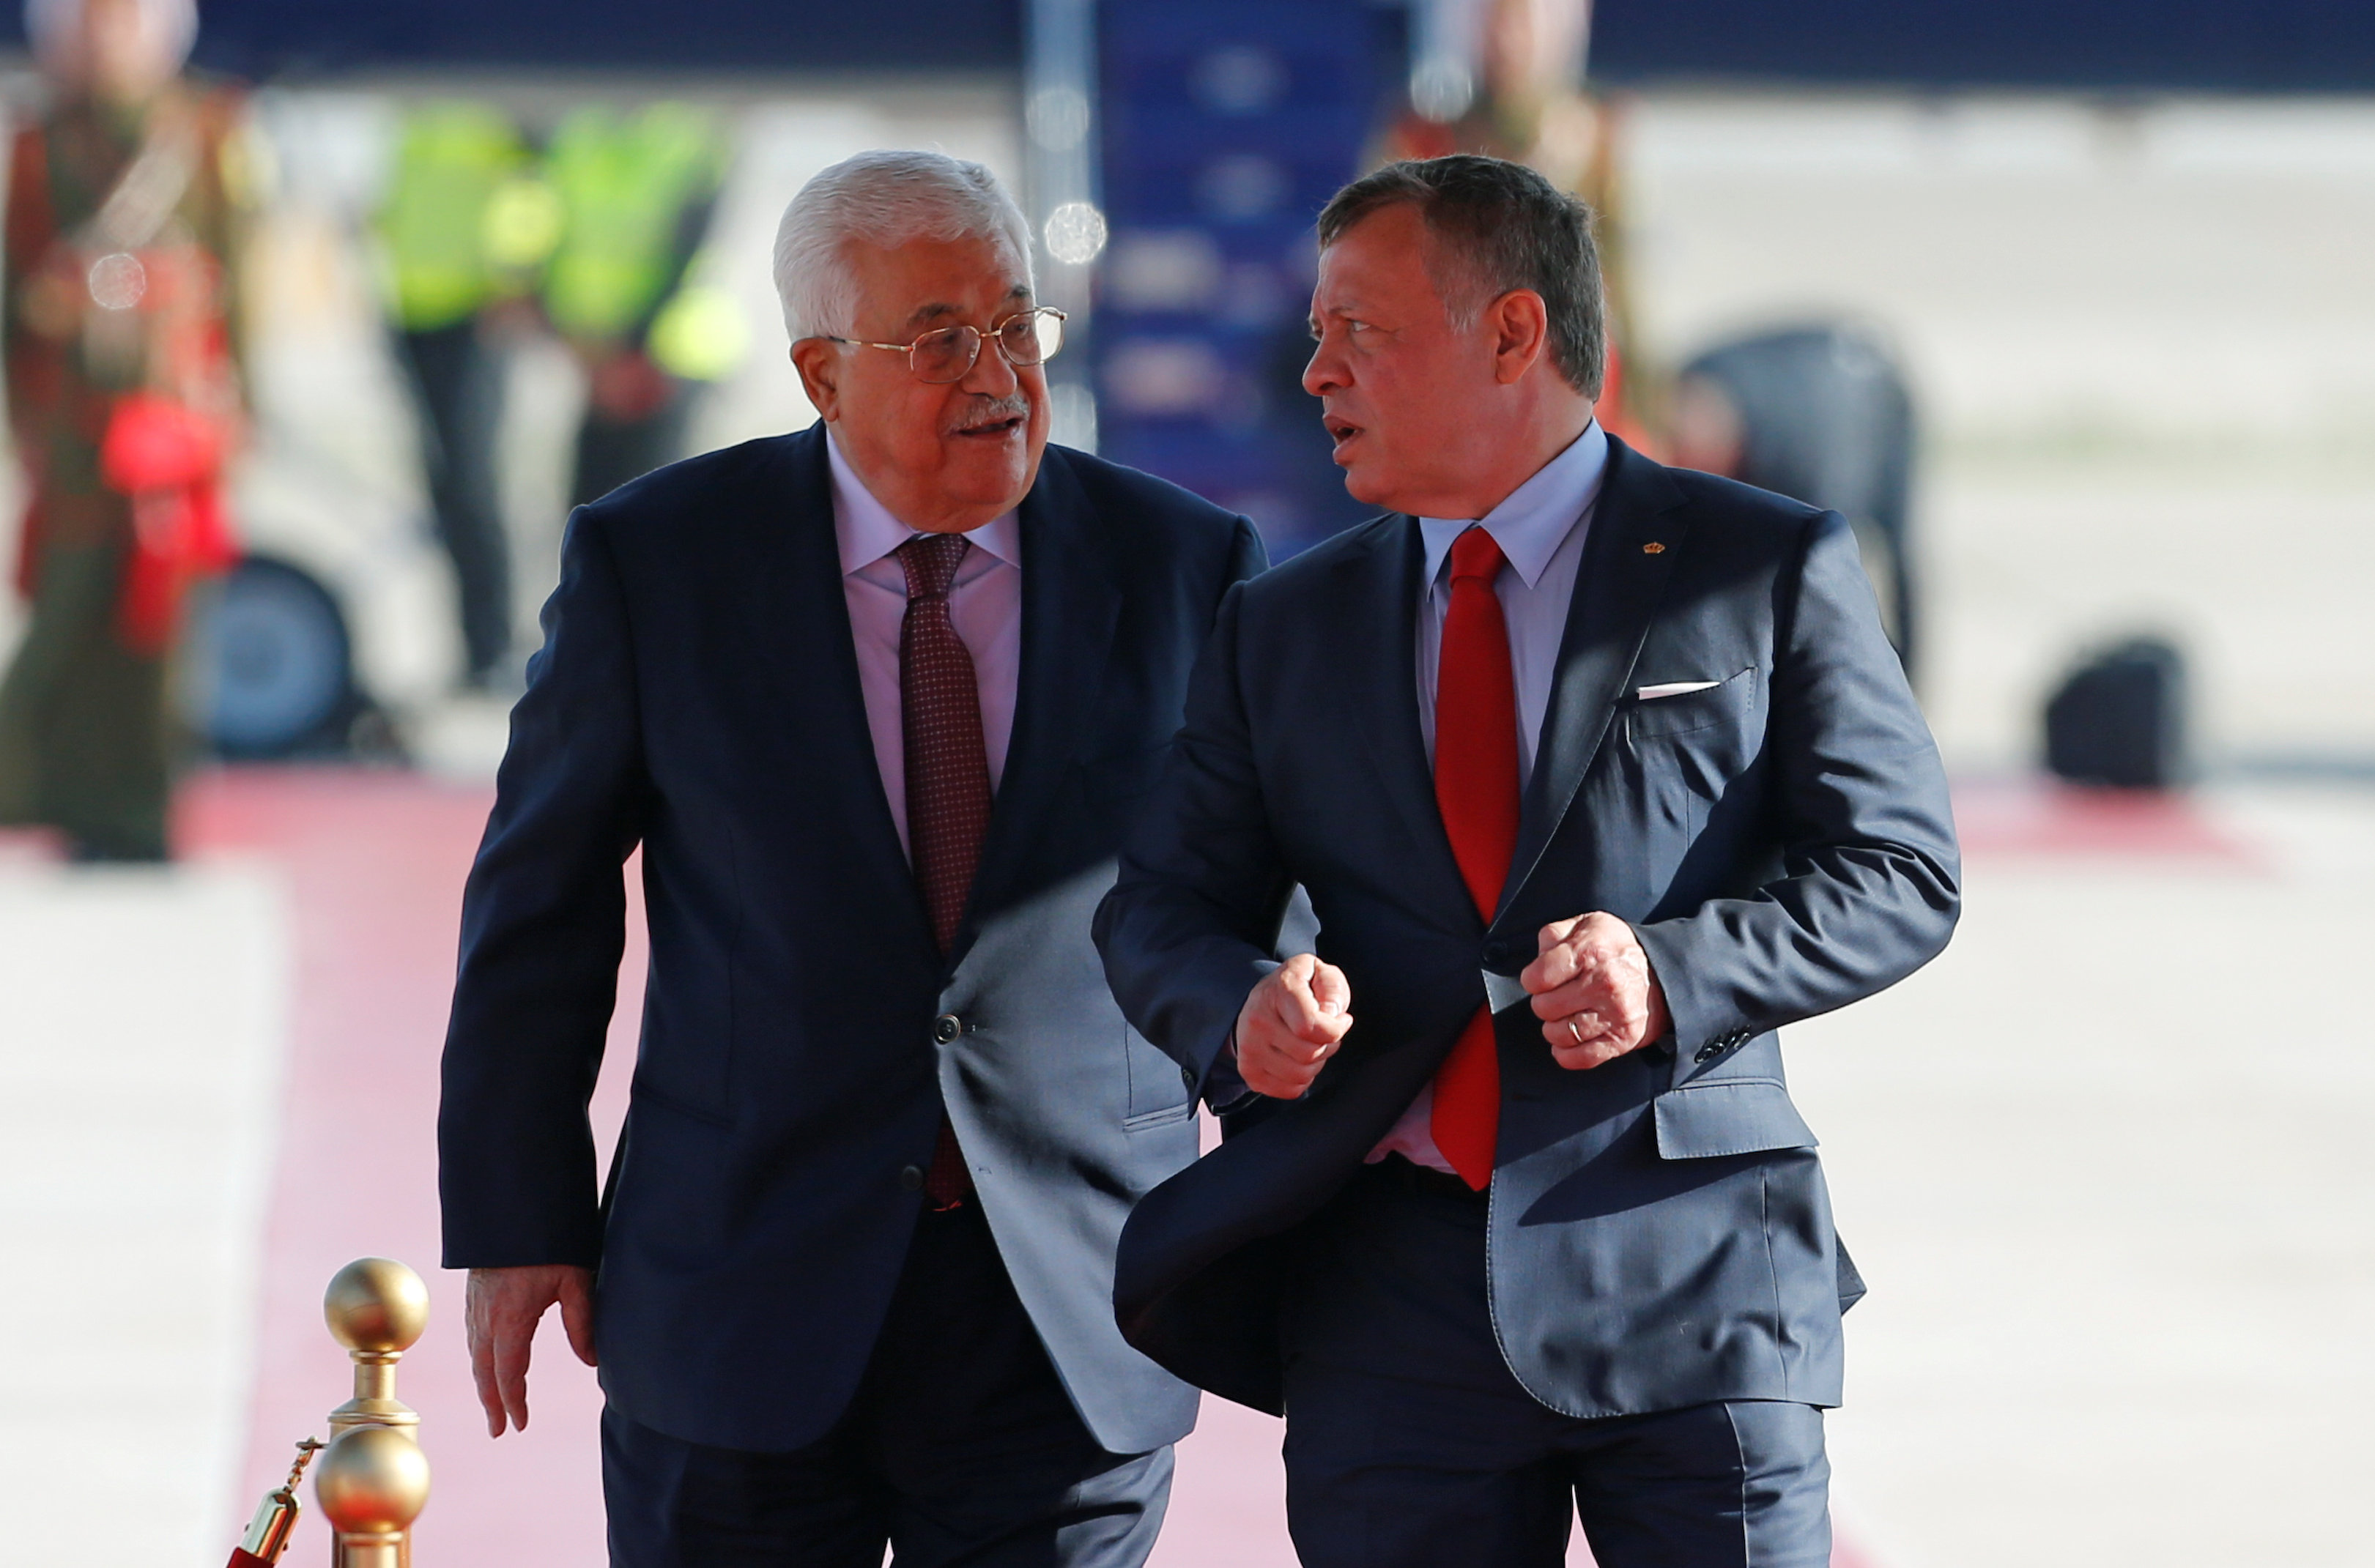 Arab leaders seek common ground at summit on Palestinian state